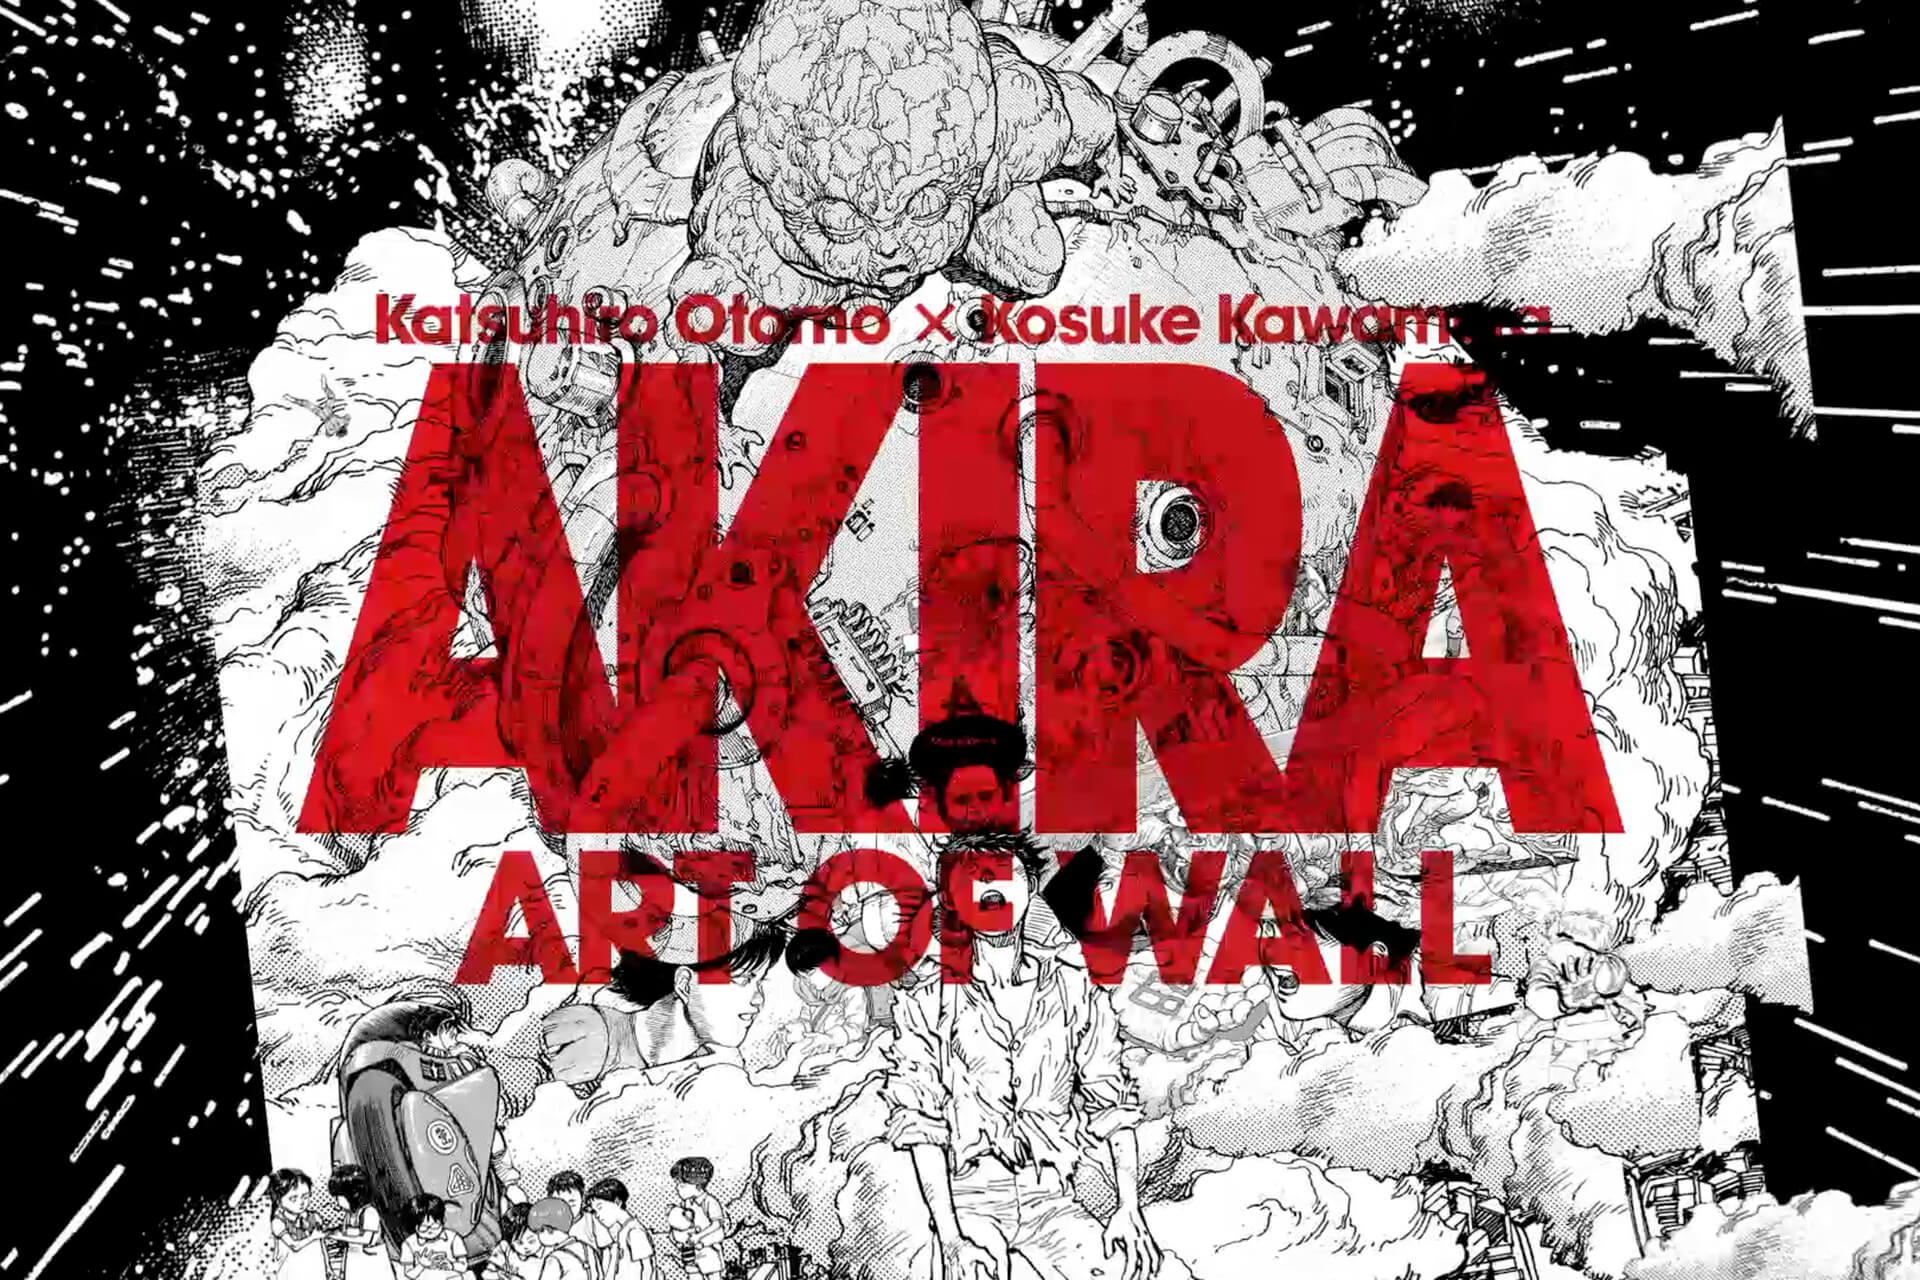 AKIRA ART OF WALL Katsuhiro Otomo × Kosuke Kawamura AKIRA ART EXHIBITION